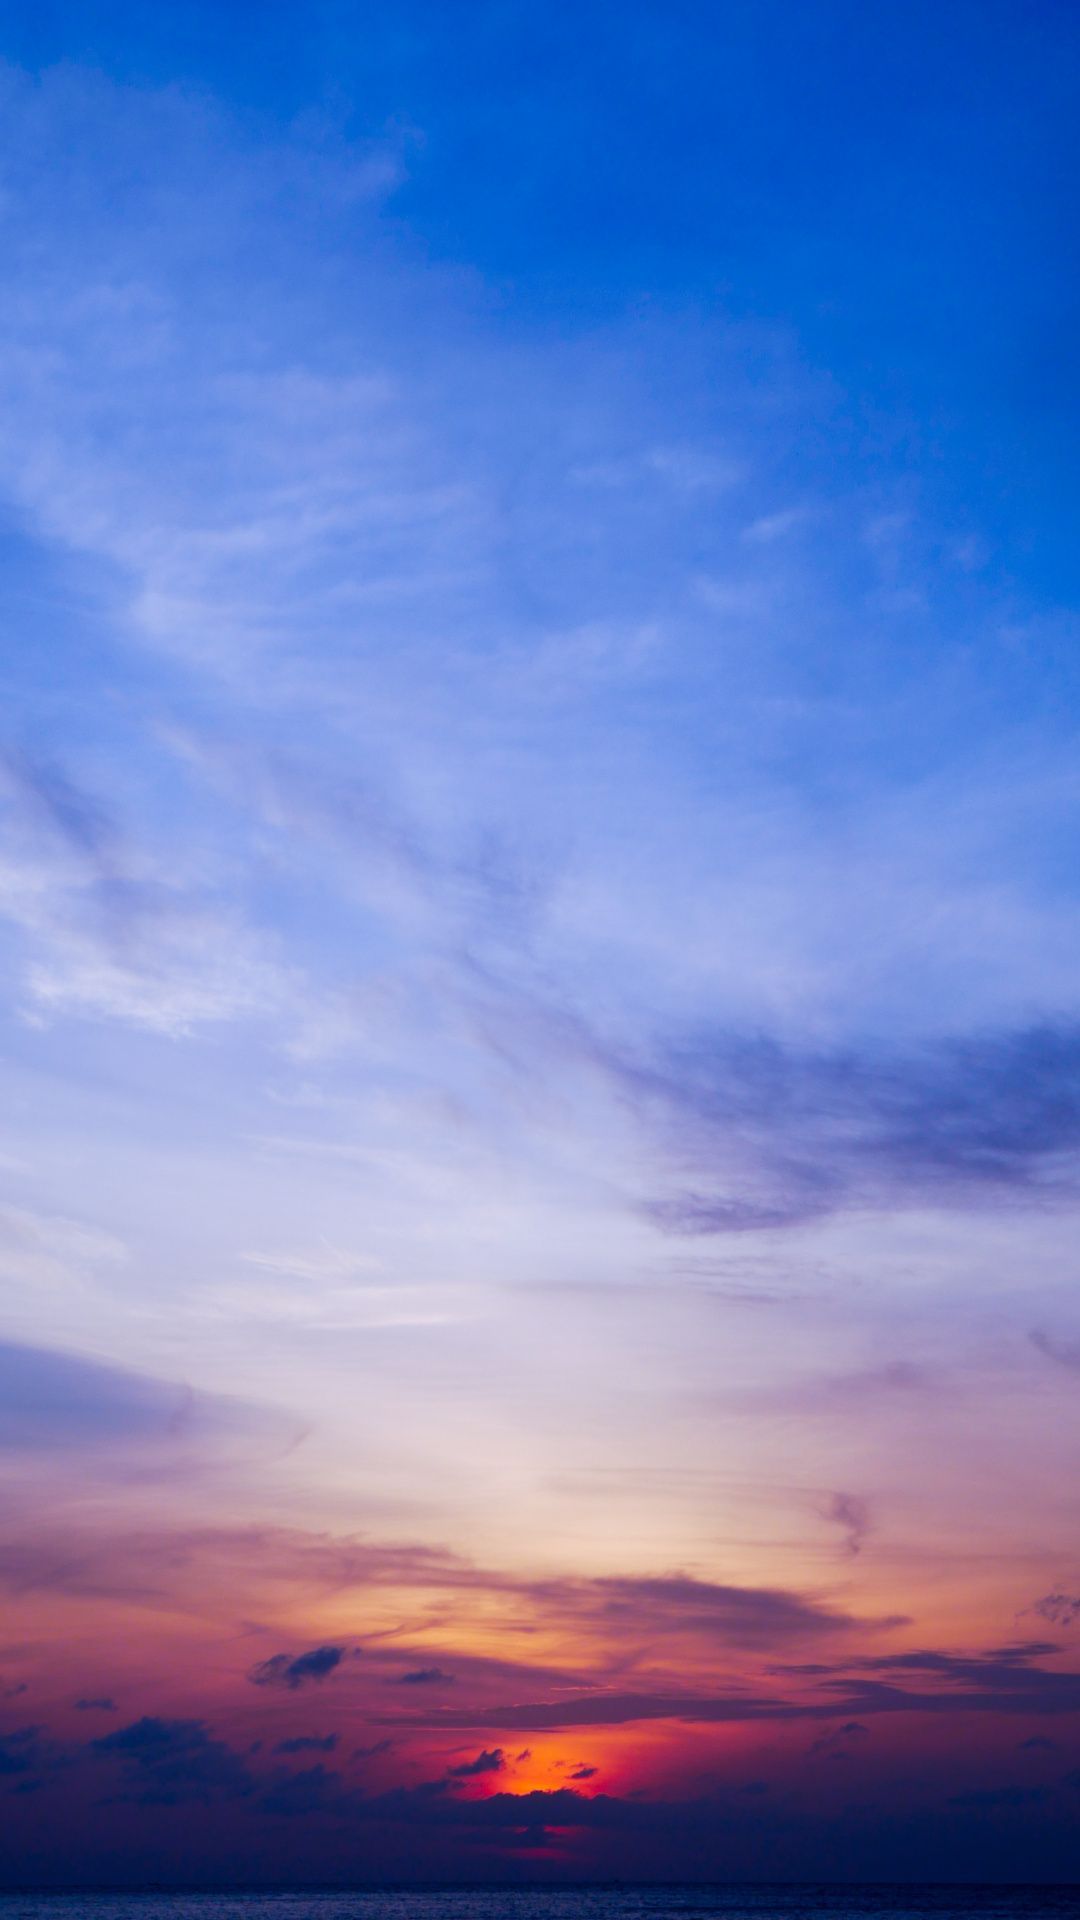 Sunset, colorful, sky wallpaper. iPhone wallpaper sky, Nature iphone wallpaper, iPhone background nature